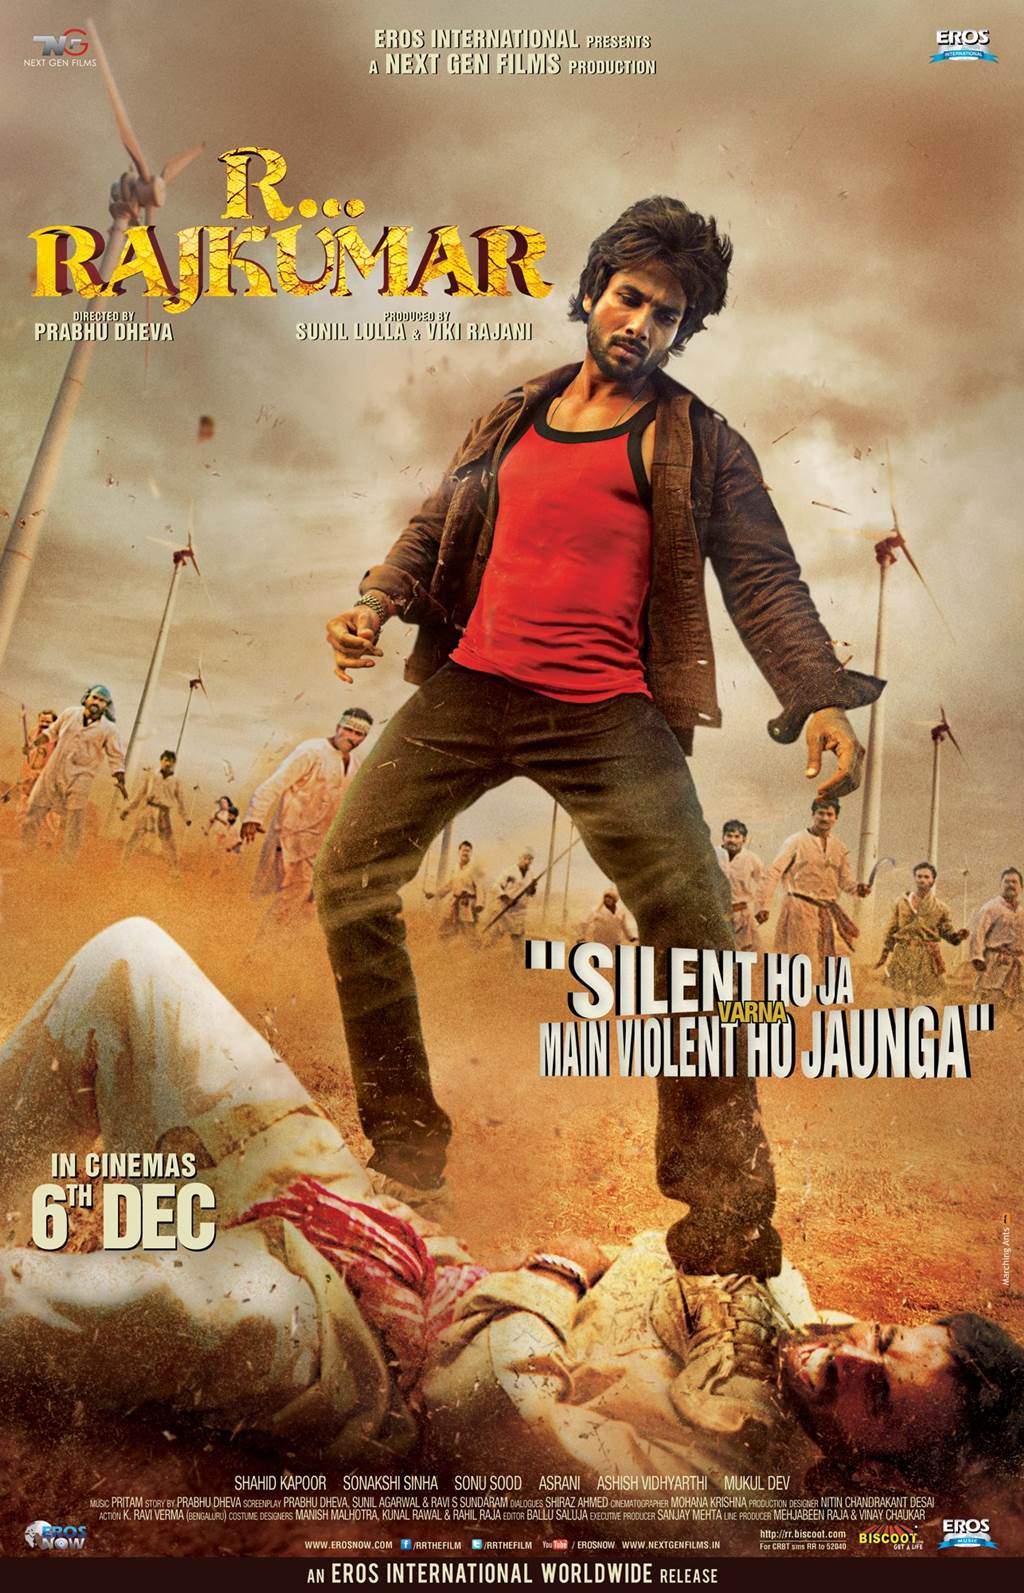 Rajkumar Shahid Kapoor Movie Posters and Trailer - XciteFun.net